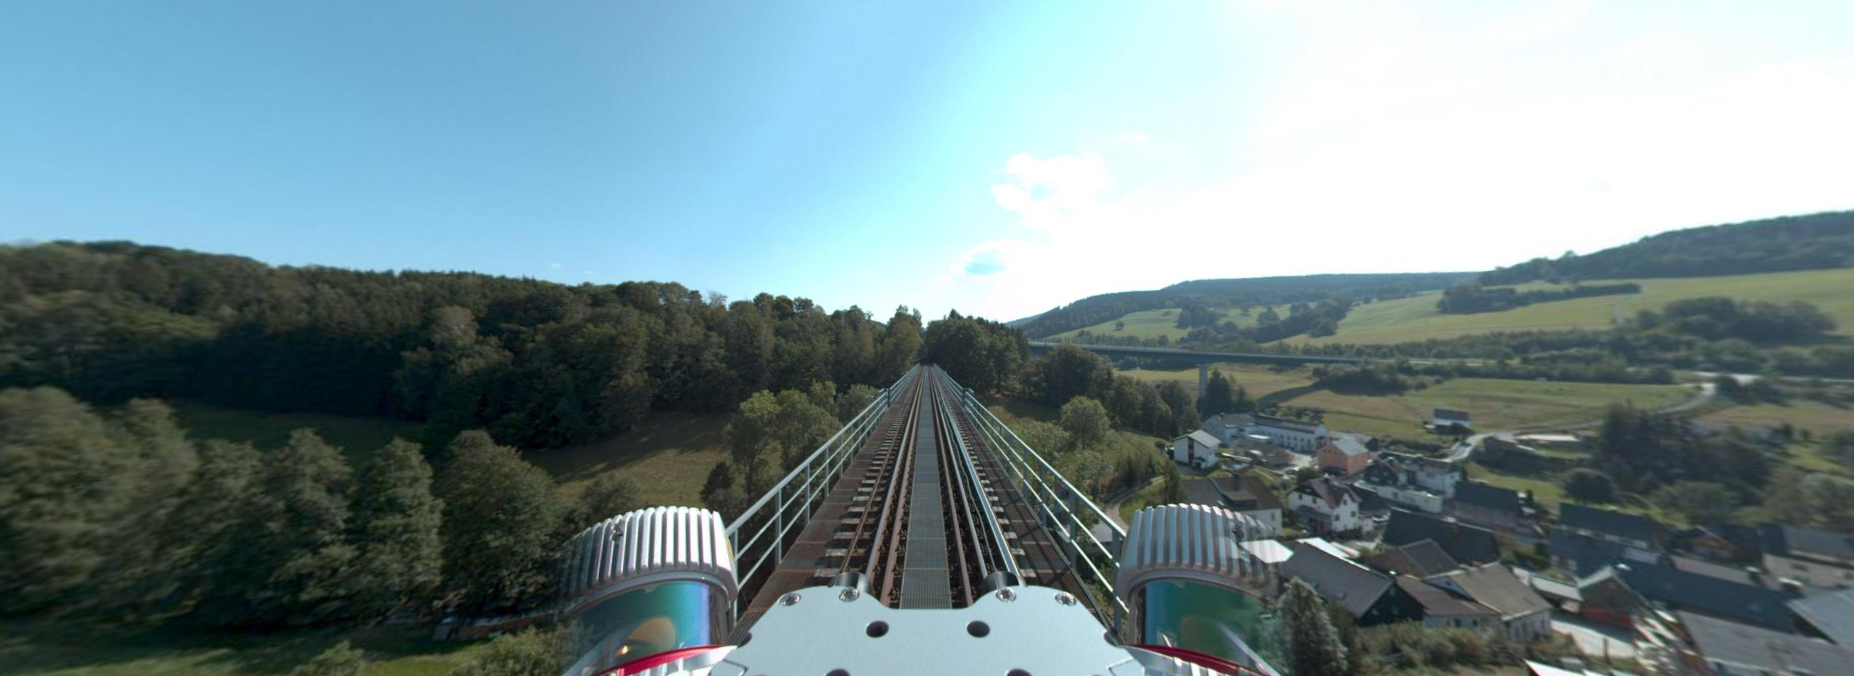 360° - Multisensorplattform: Panoramabild